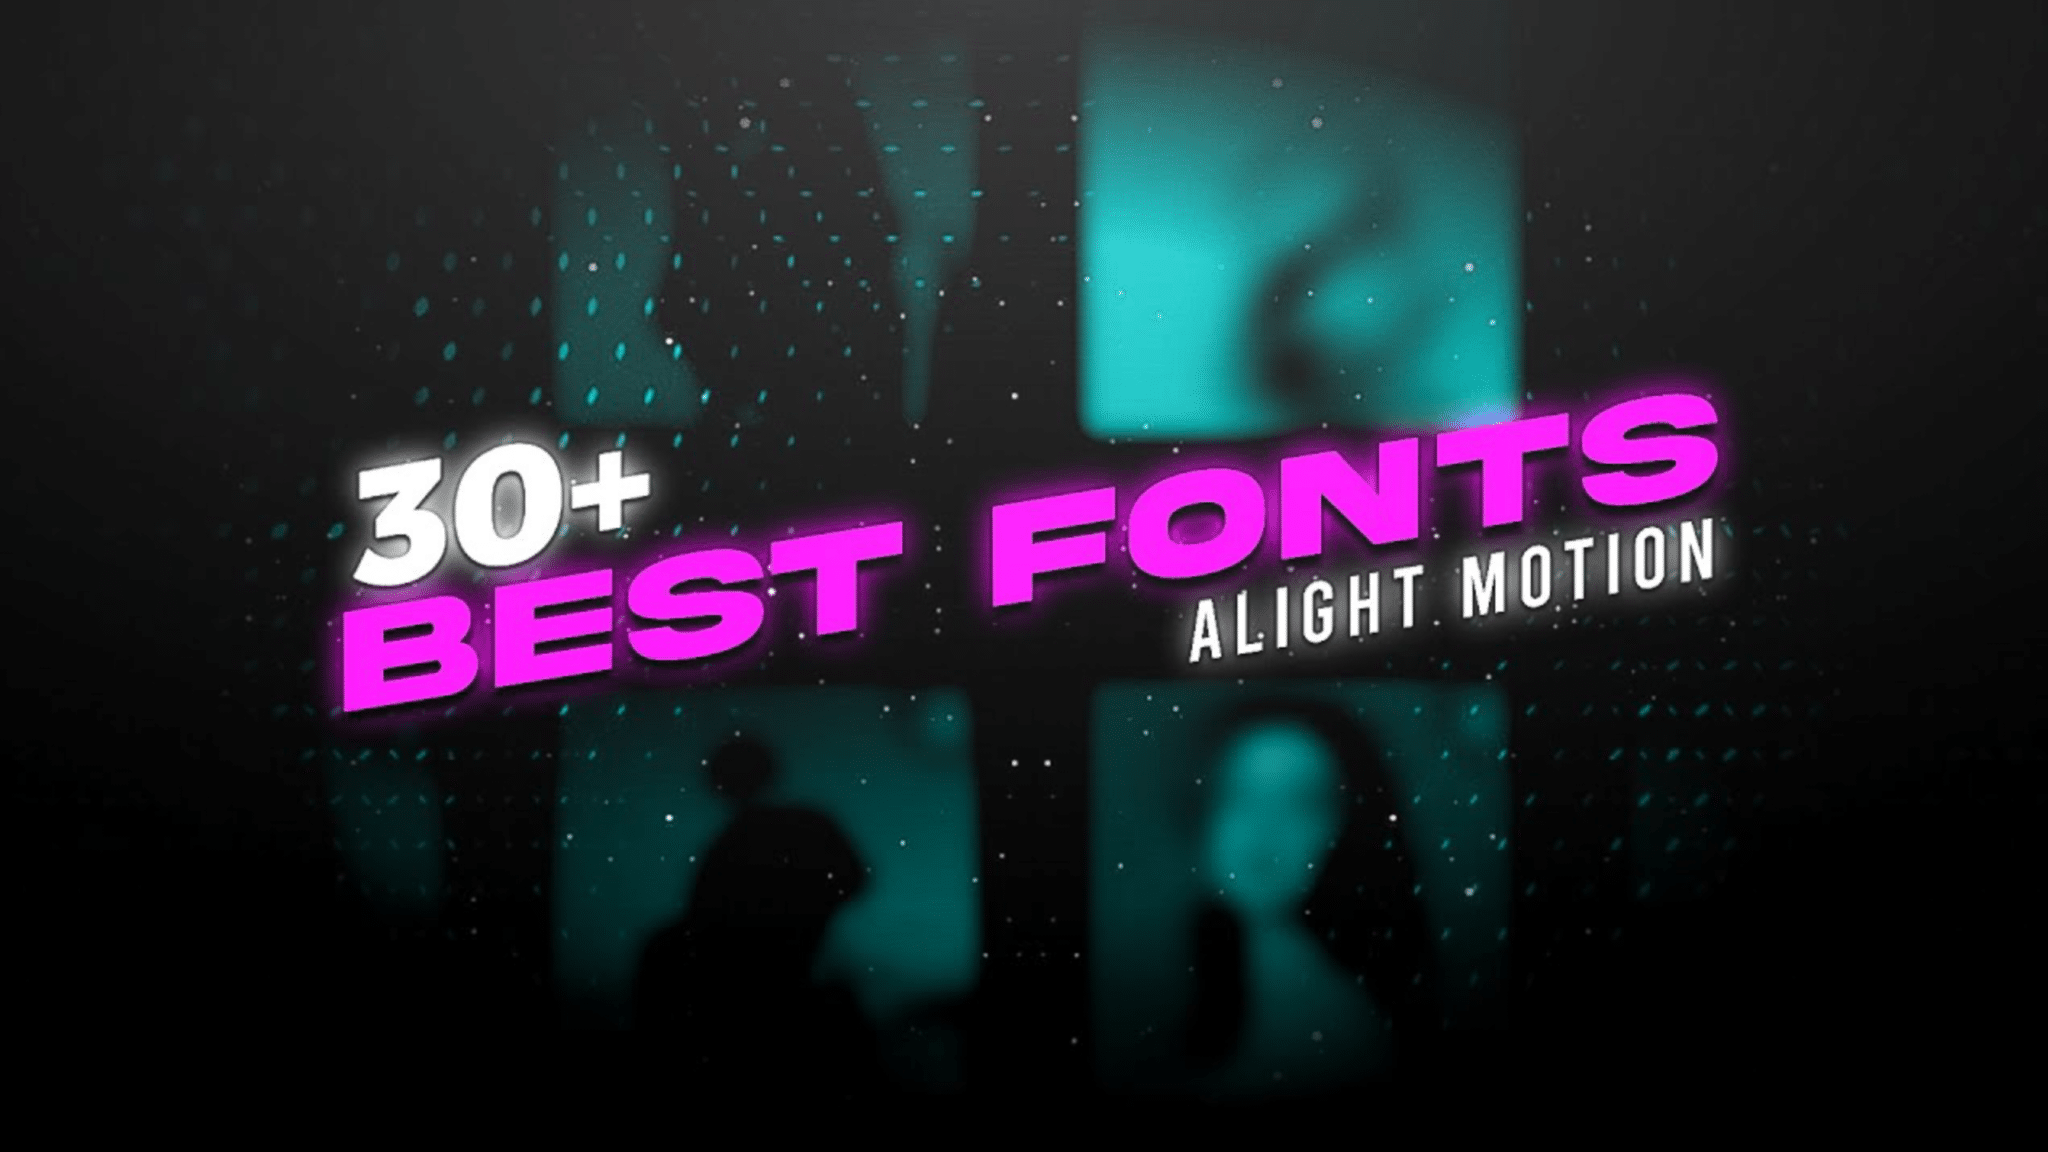 30+ best alight motion fonts Pack | Best fonts alight motion pack